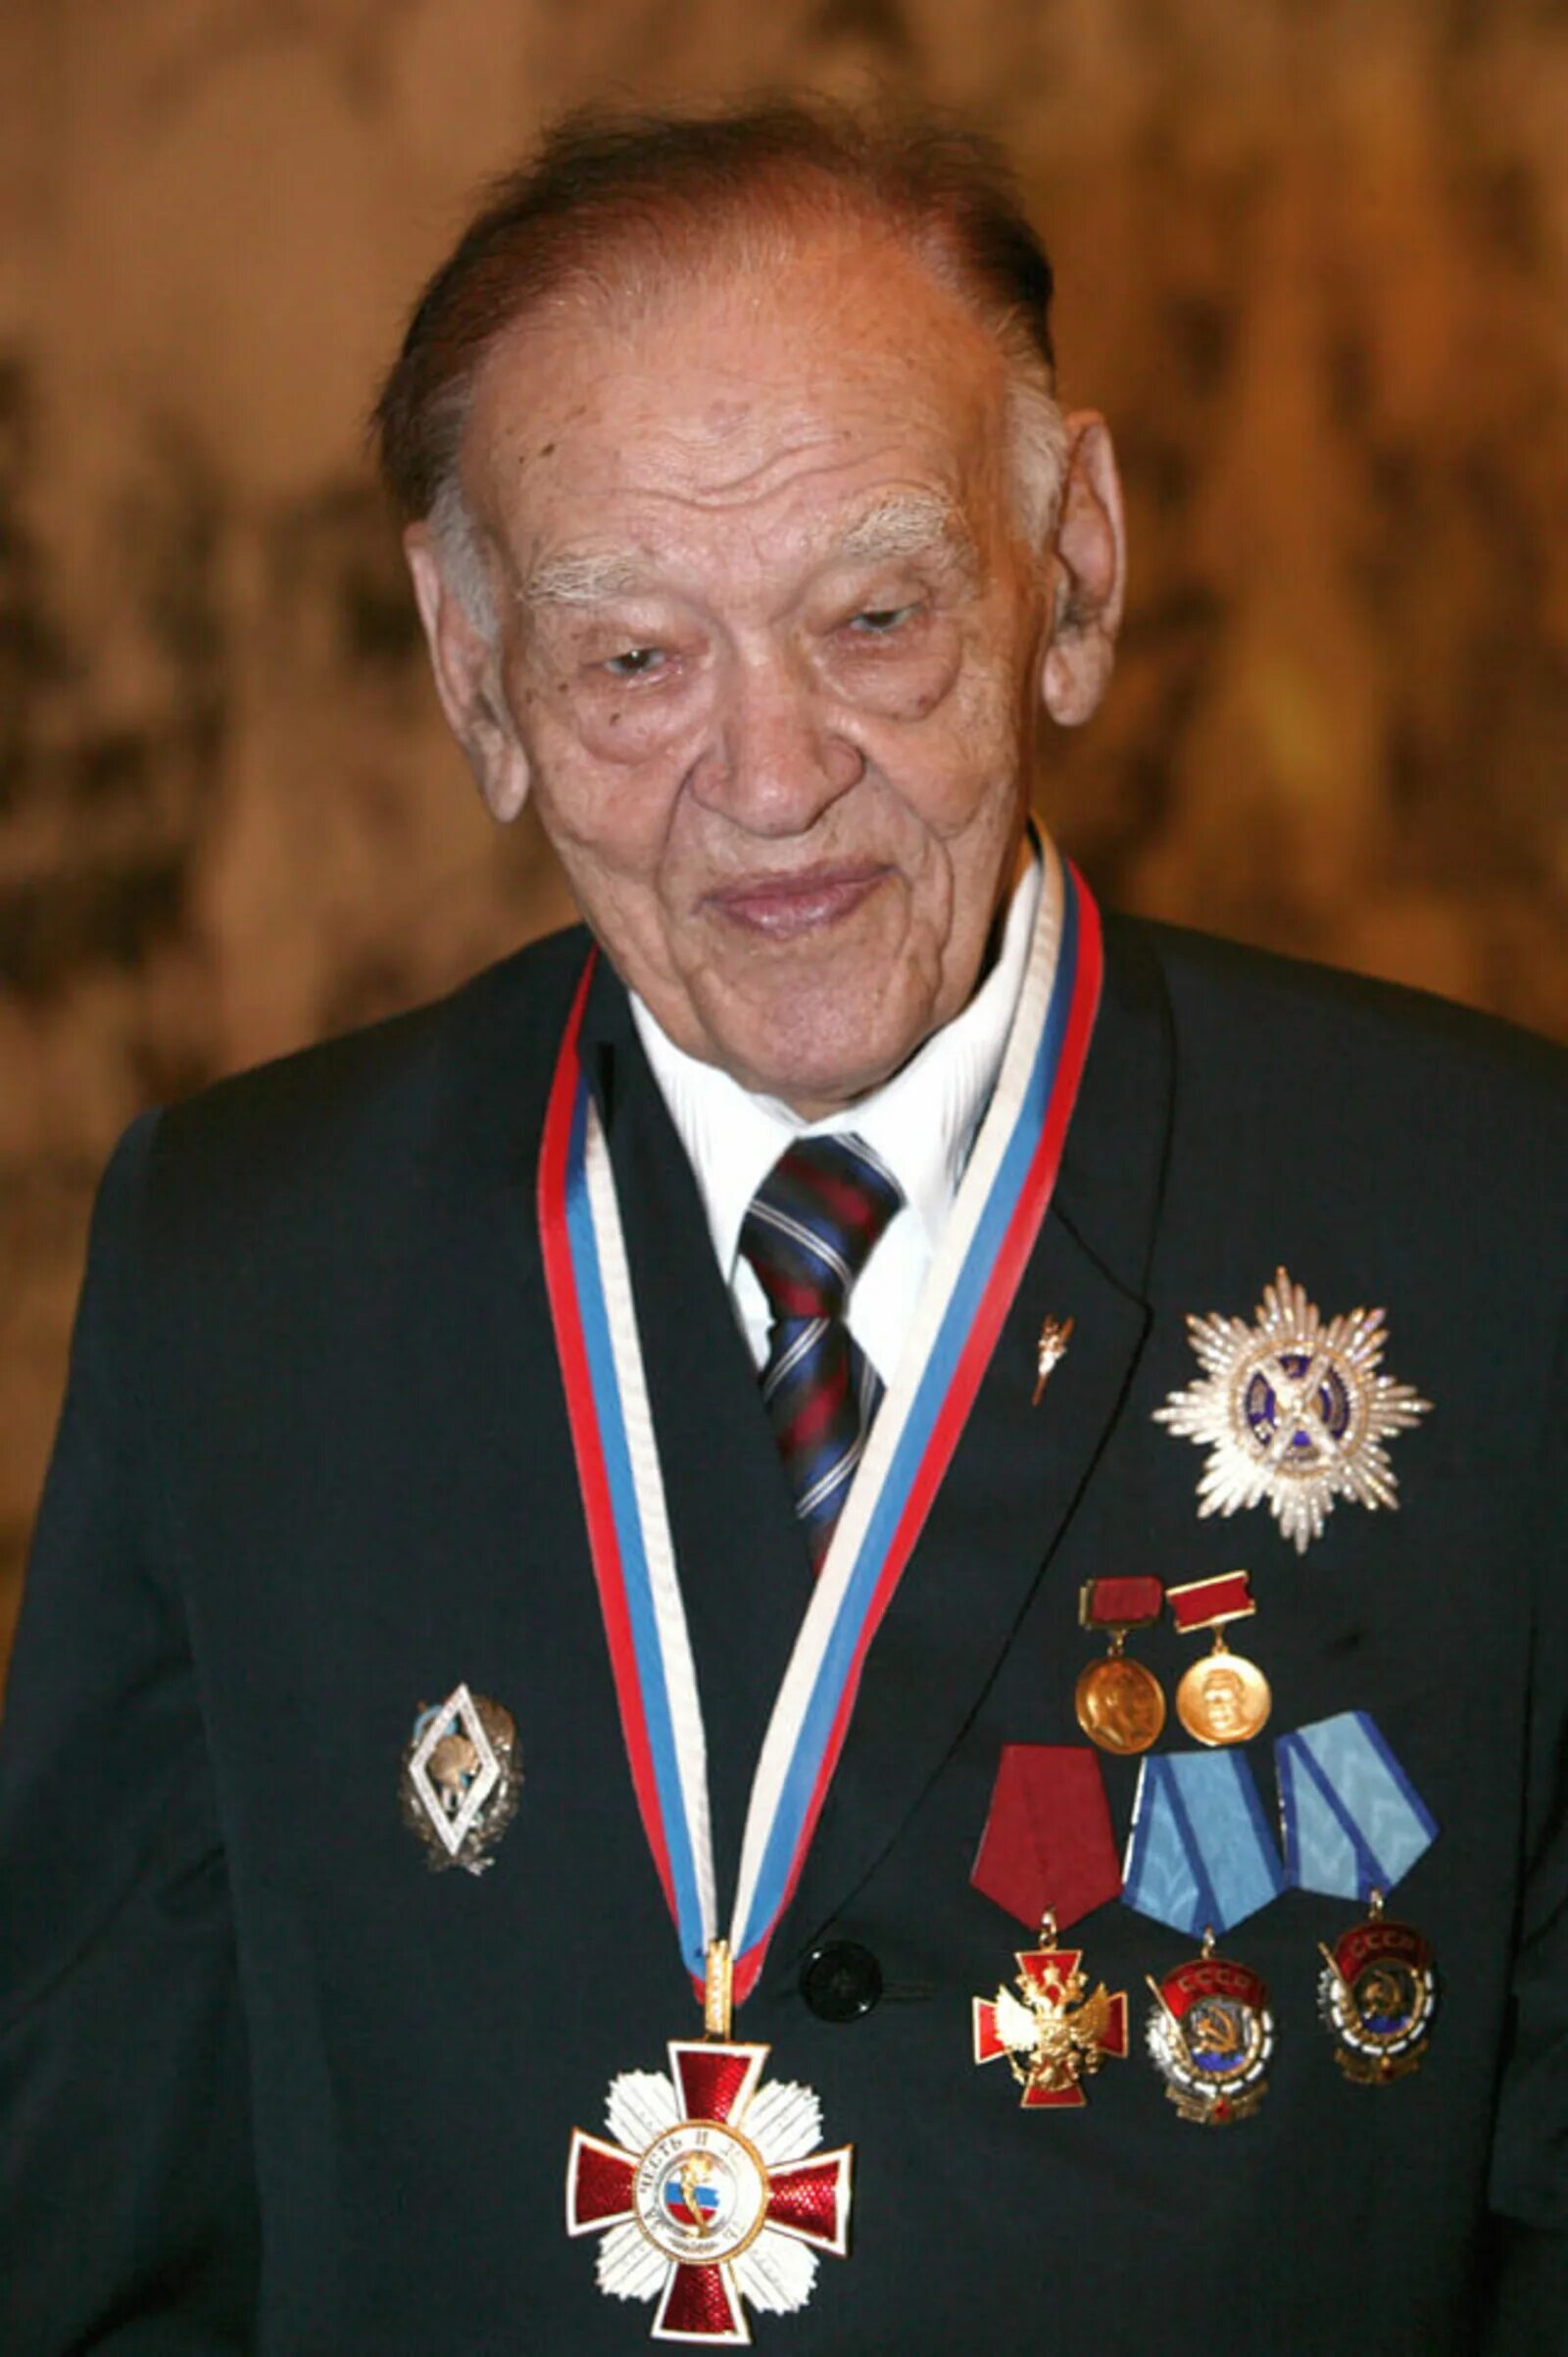 Ф г рф. Федора Григорьевича Углова:. Углов фёдор Григорьевич (1904-2008).